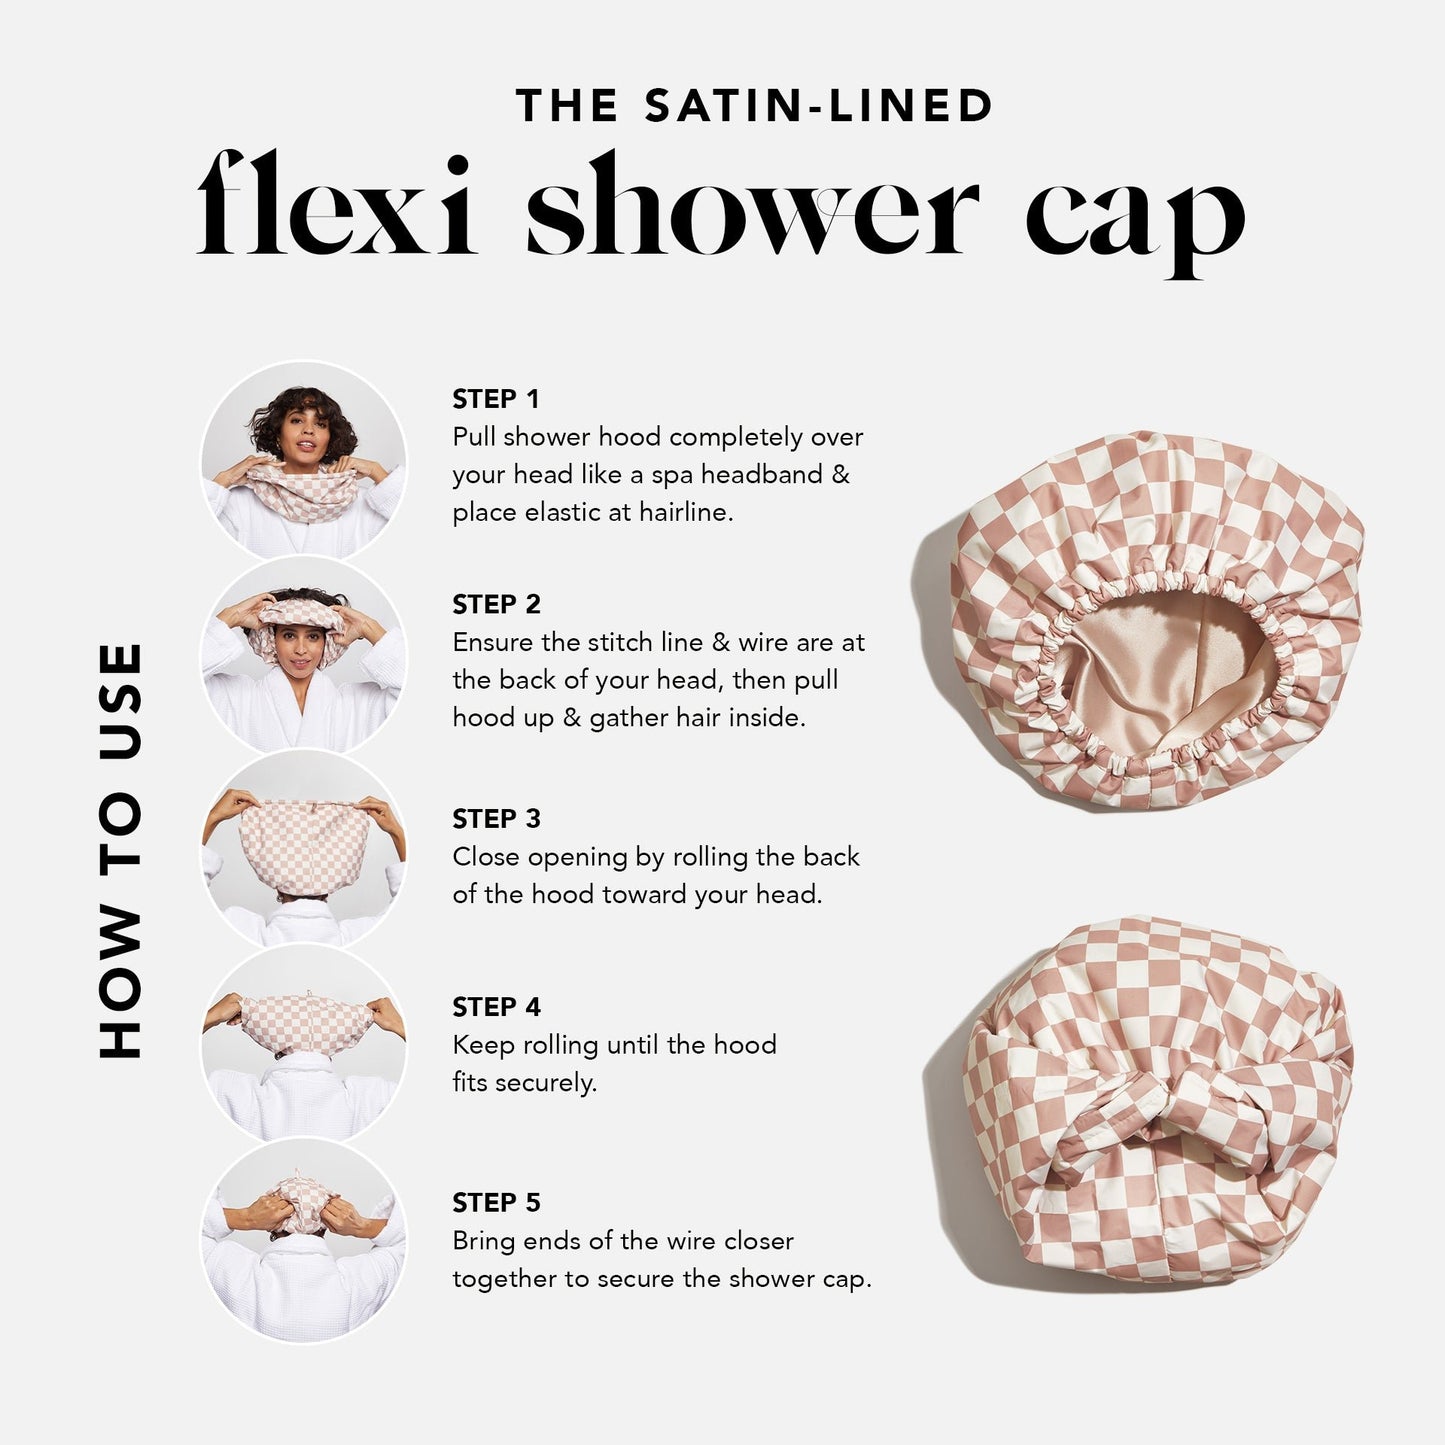 Satin Lined Flexi Shower Cap